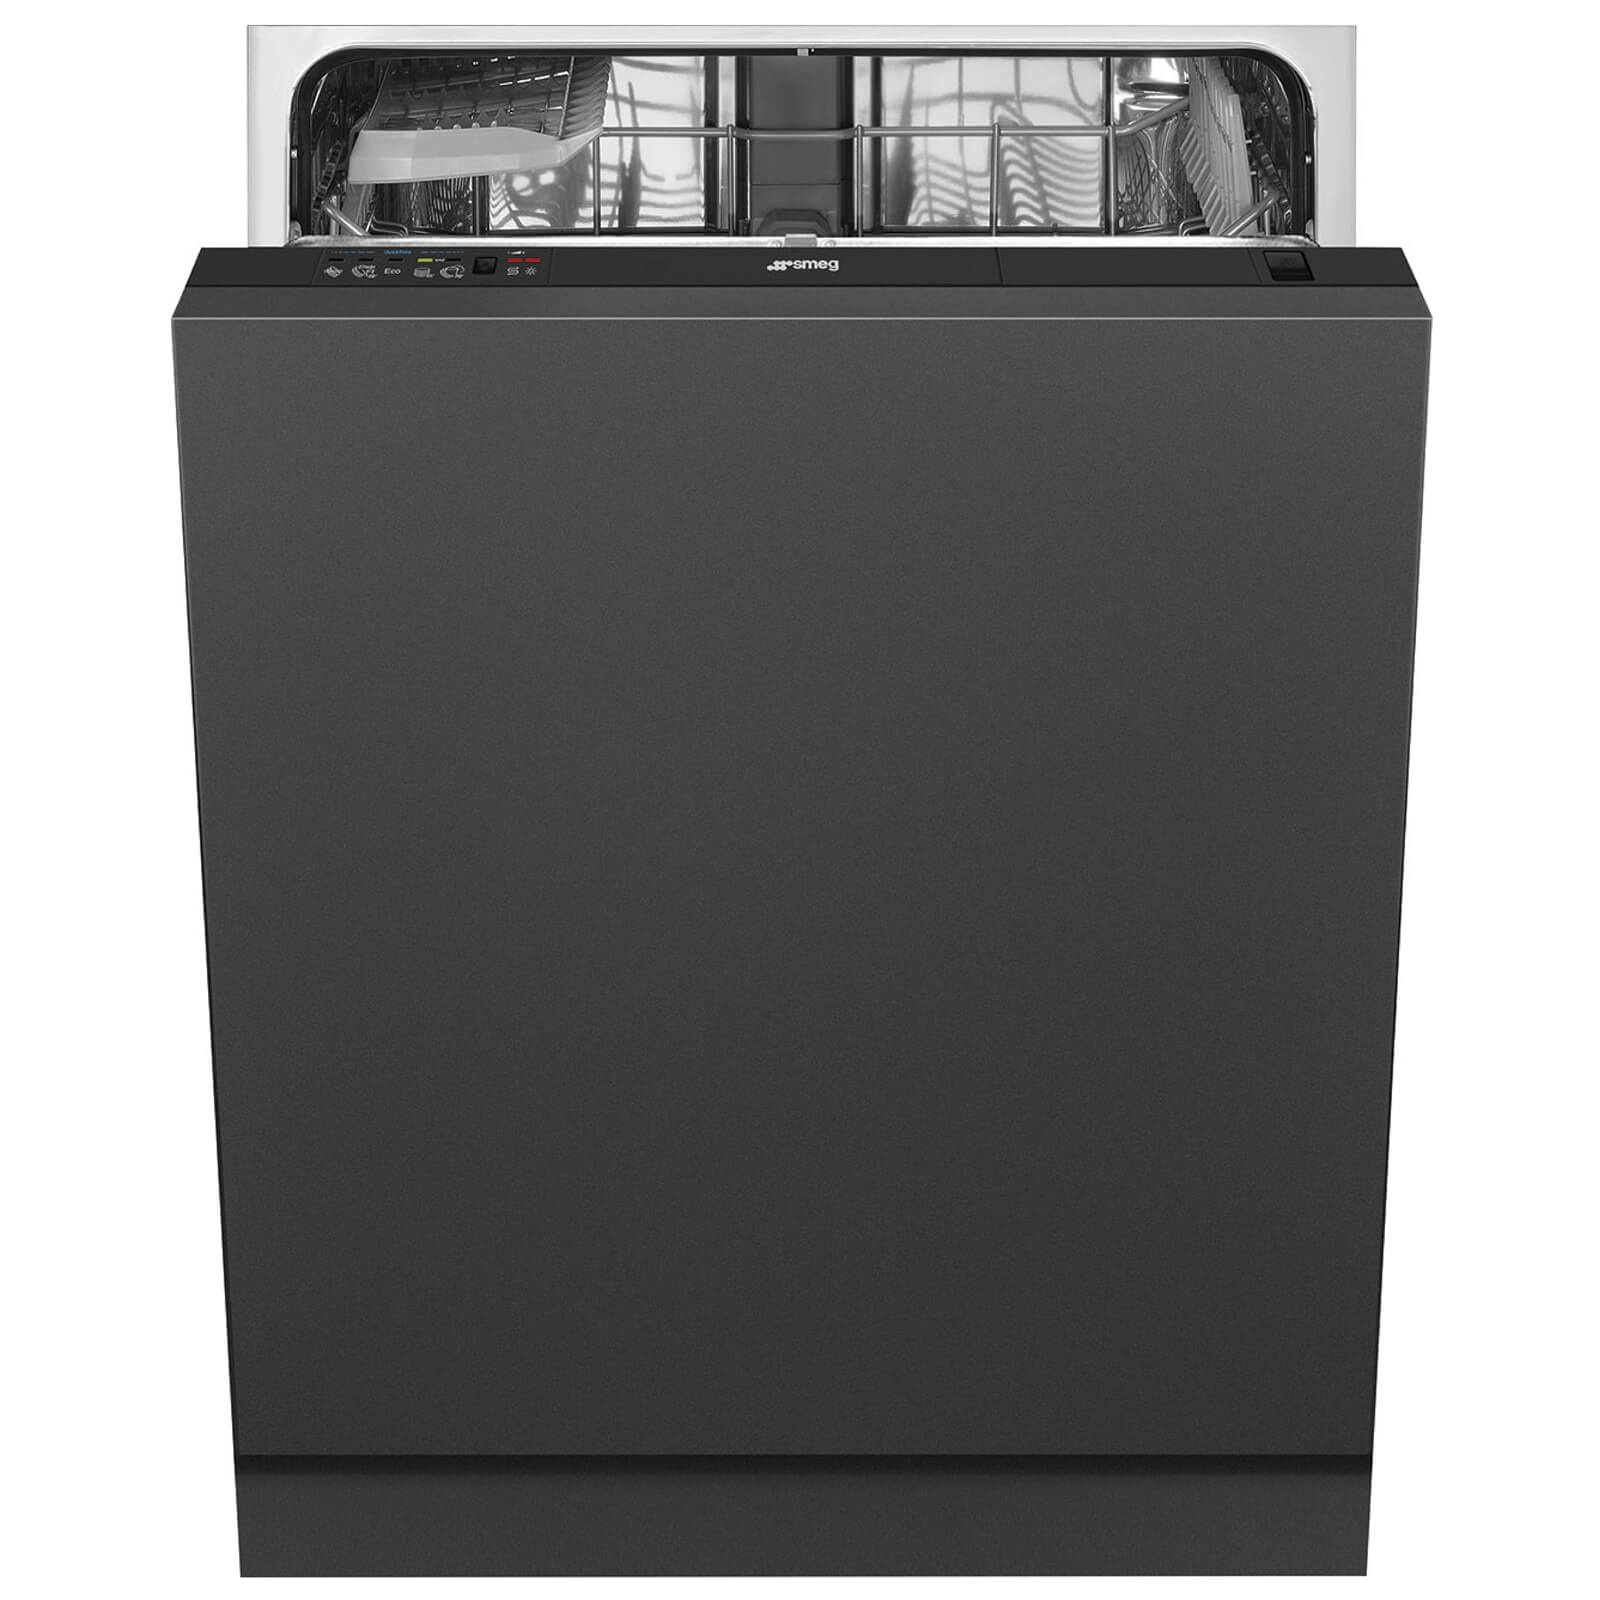 Smeg DI12E1 60cm Fully Integrated Dishwasher